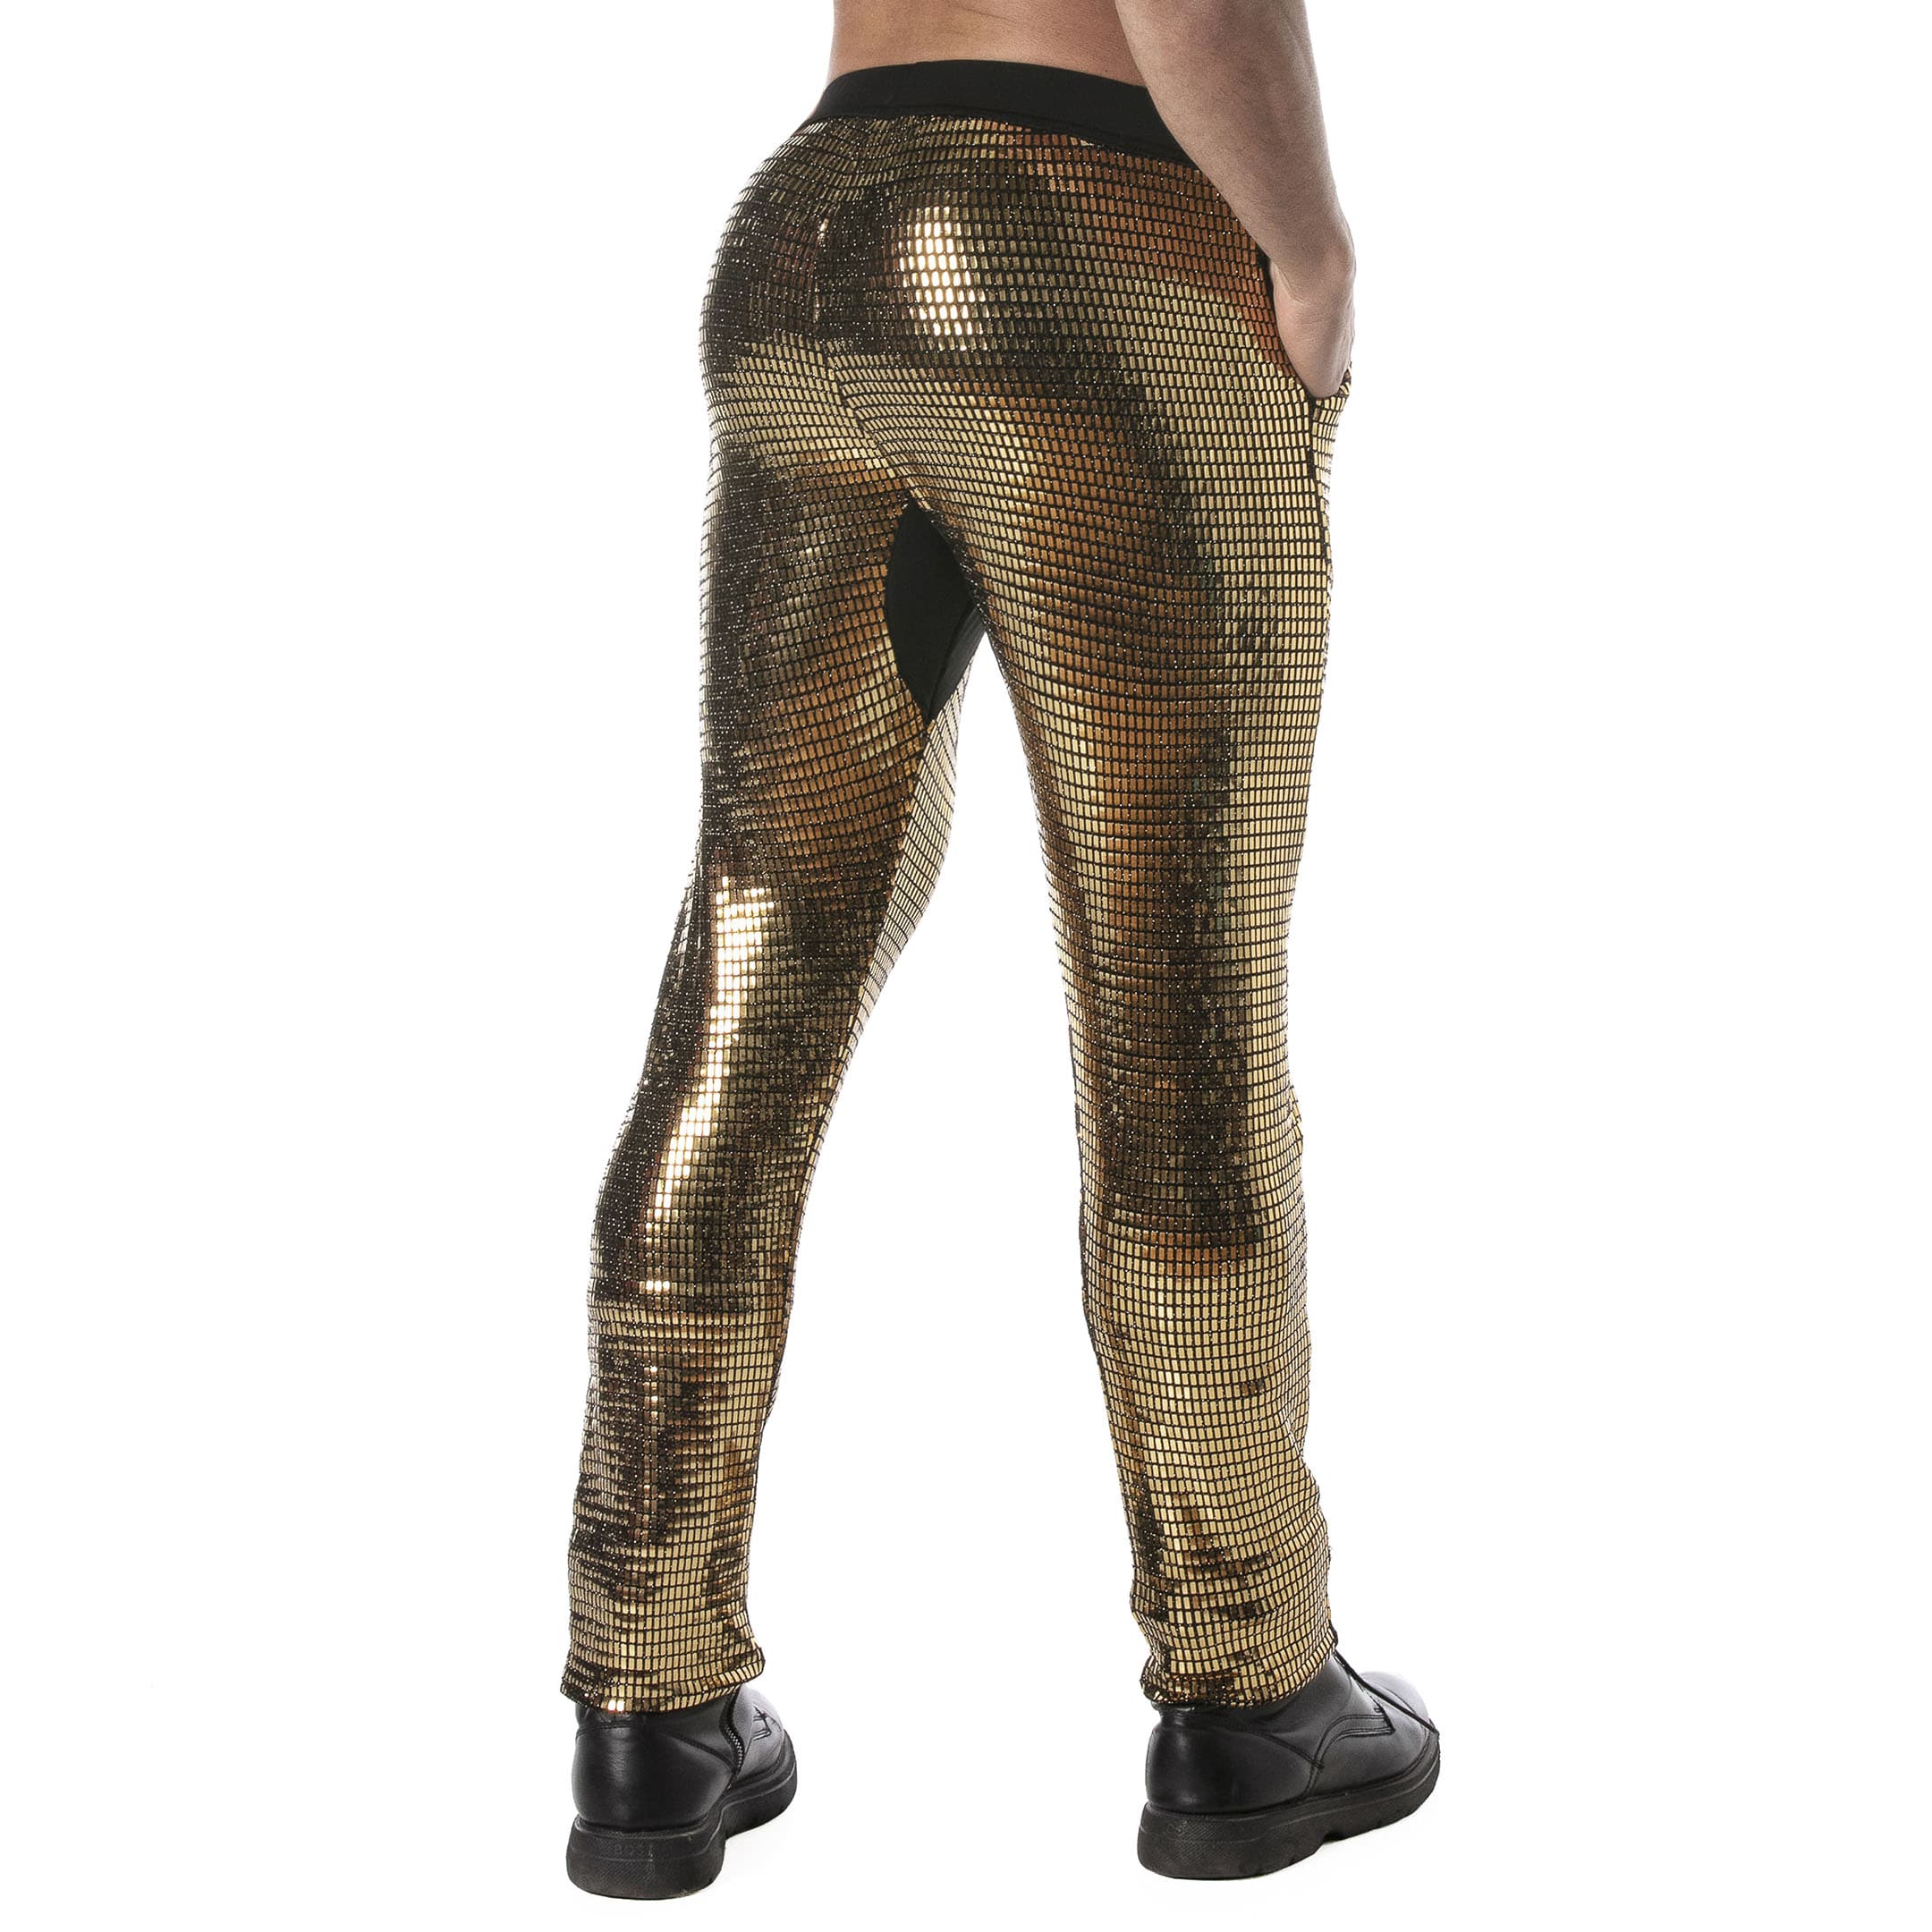 Gold Sequin Pants Sequin Pants Gold Pants Gold Glitter Pants Gold